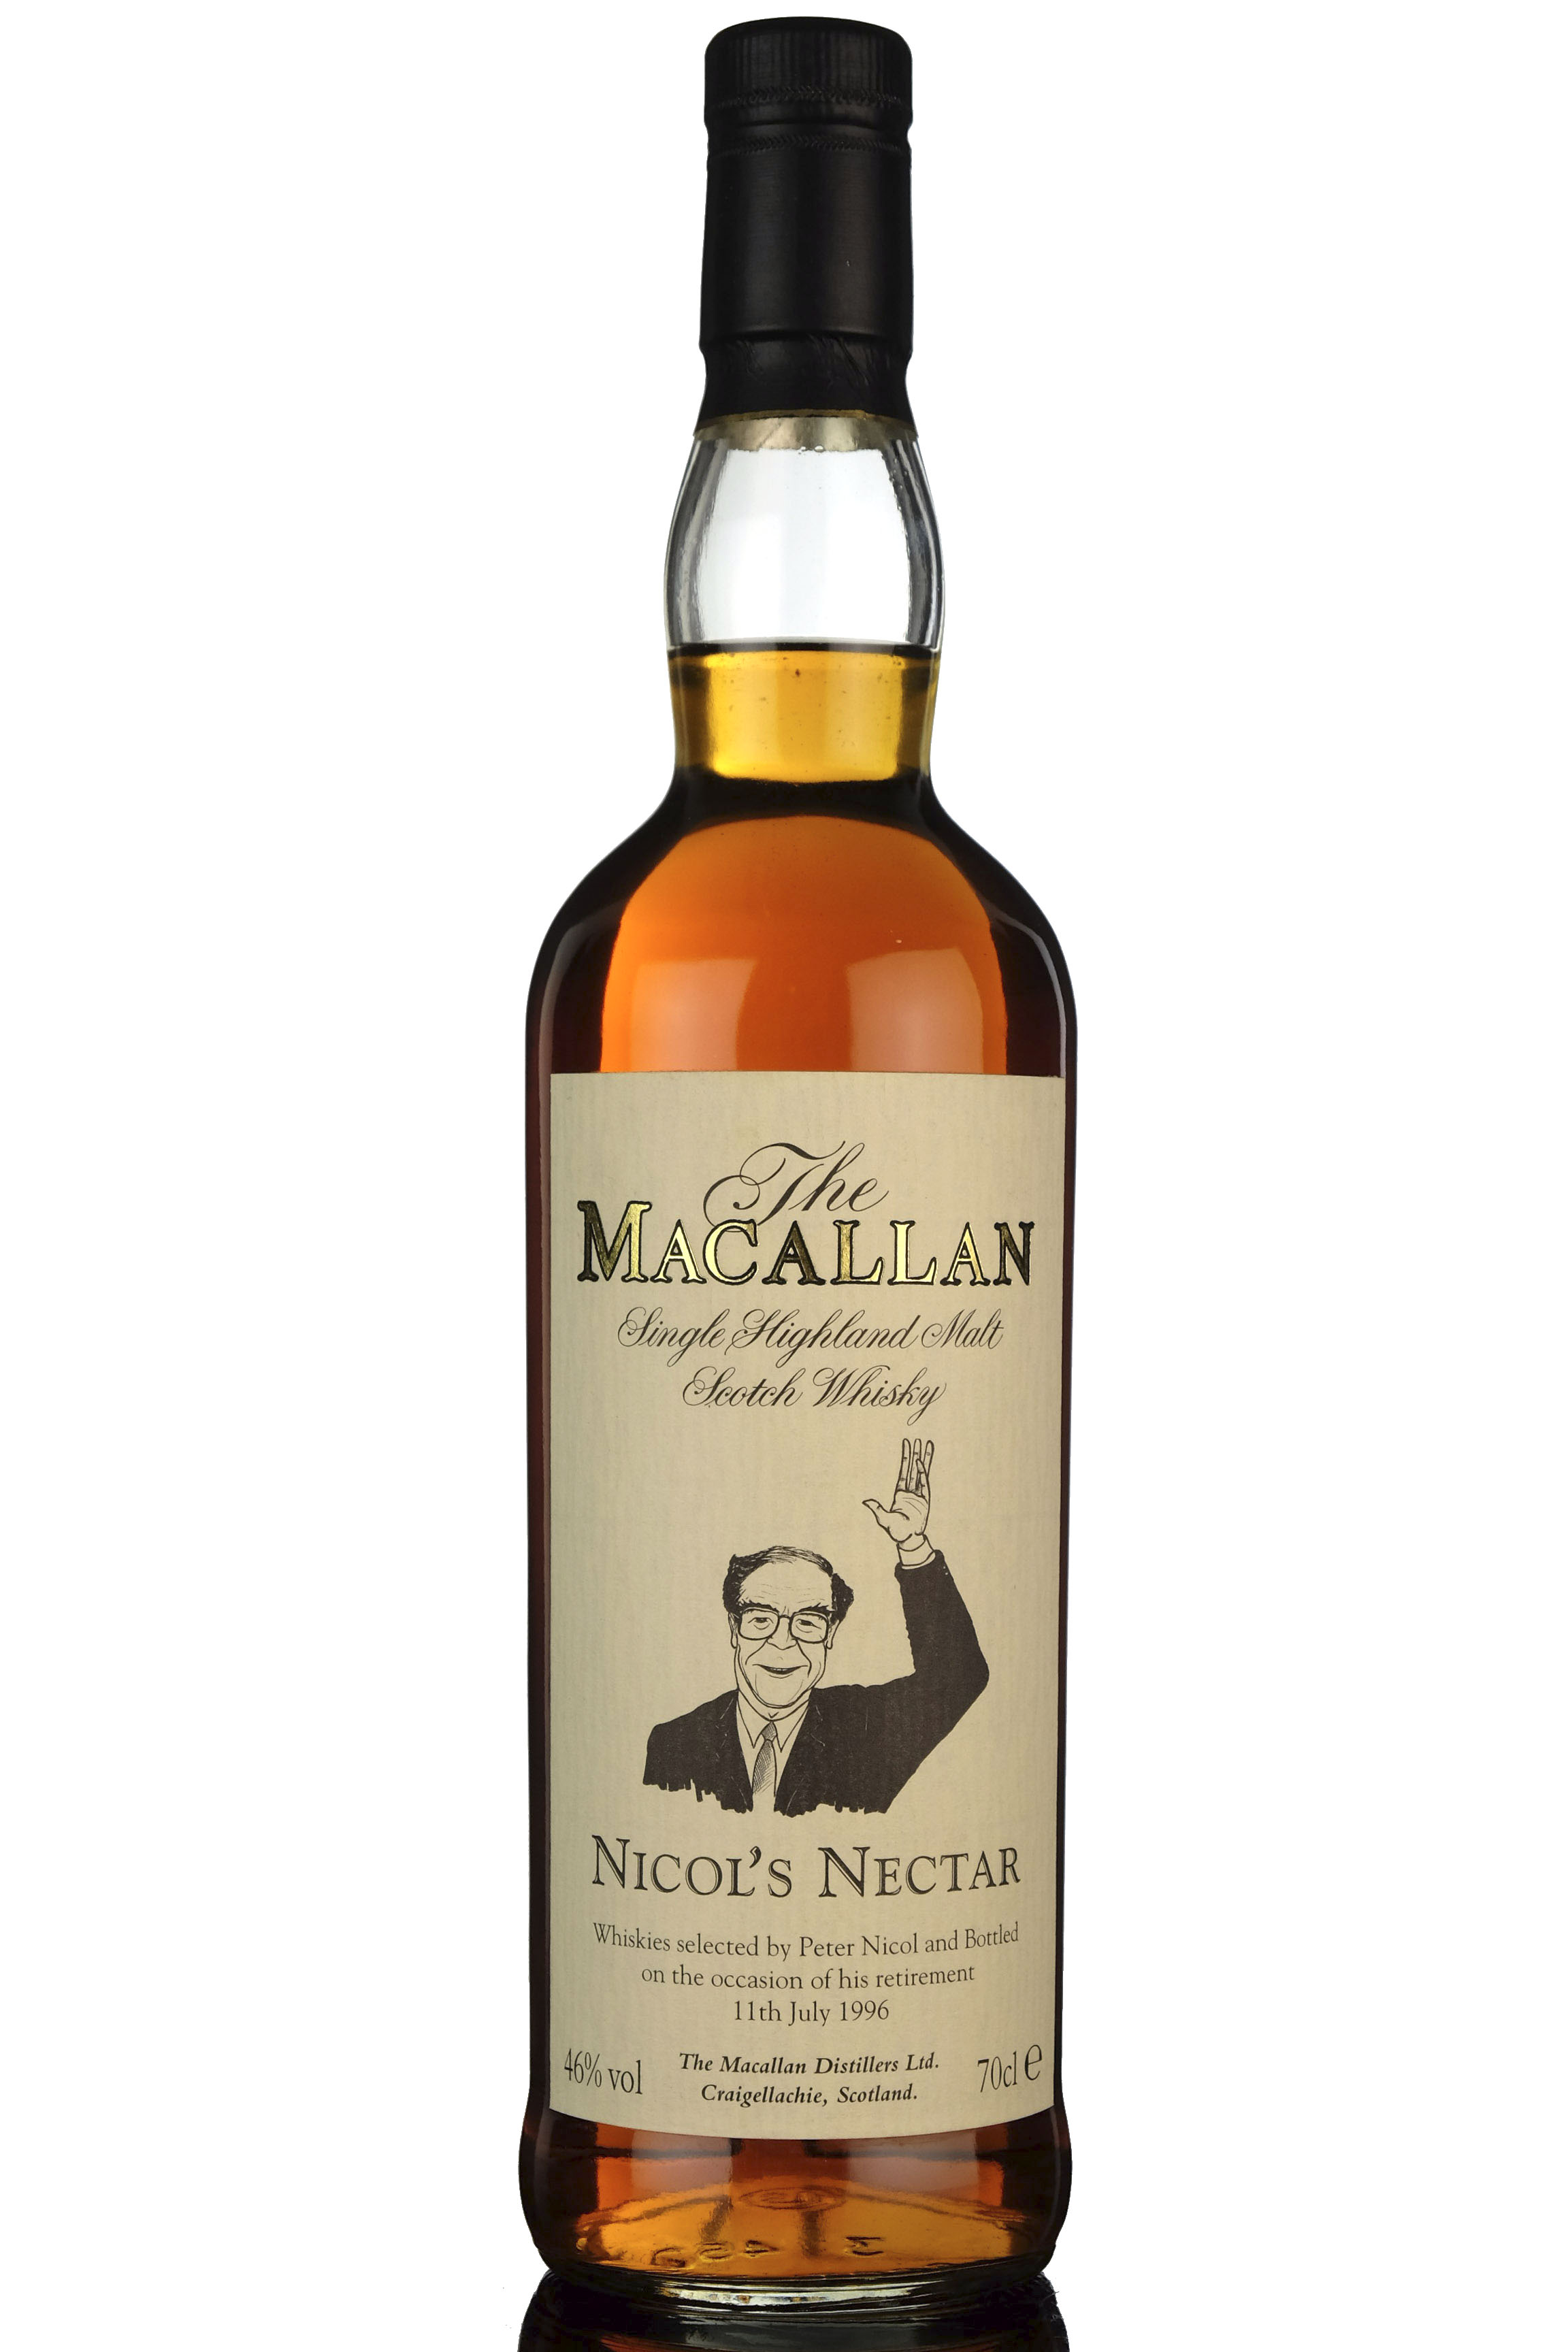 Macallan Nicols Nectar